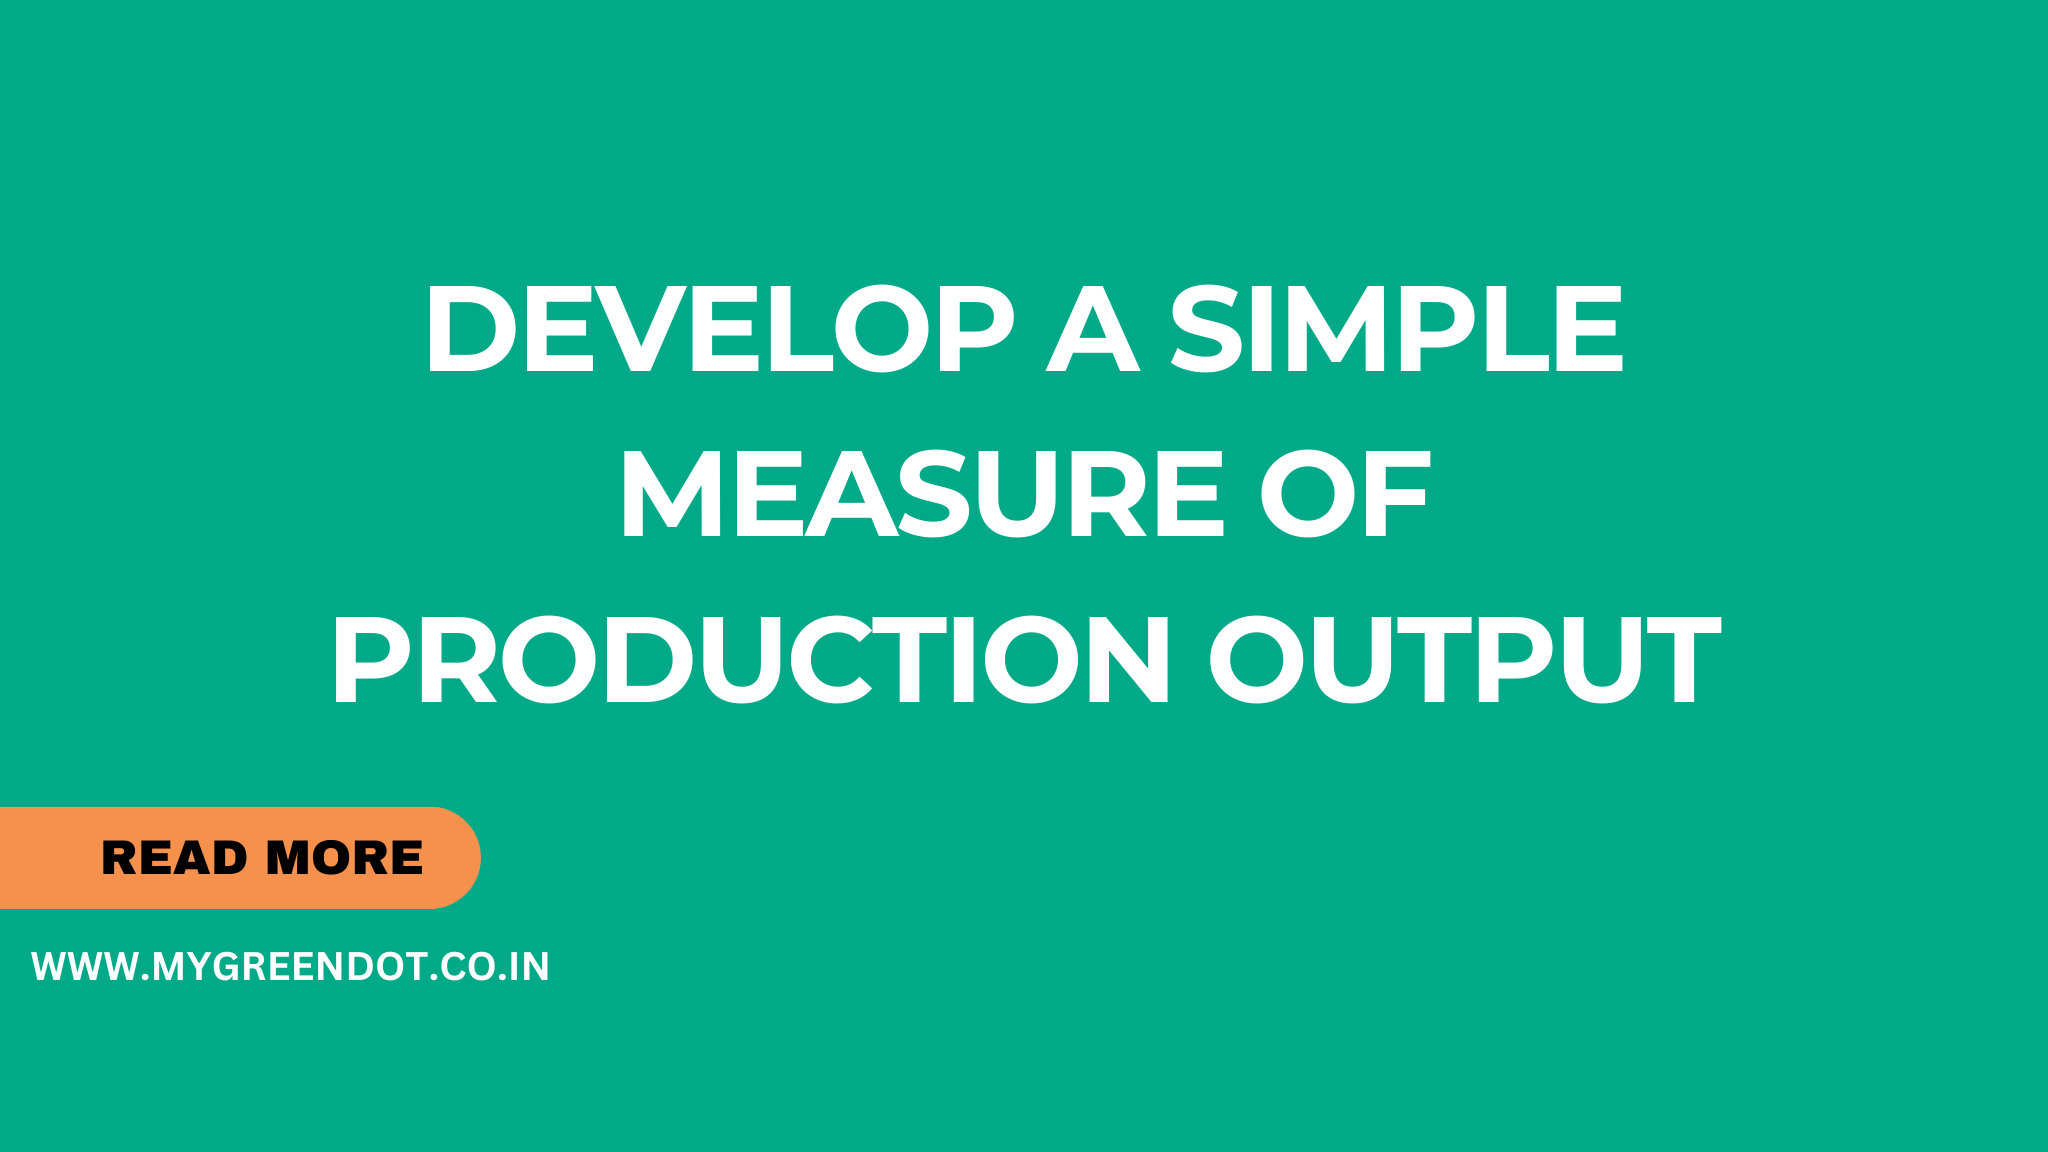 Develop a simple measure of production